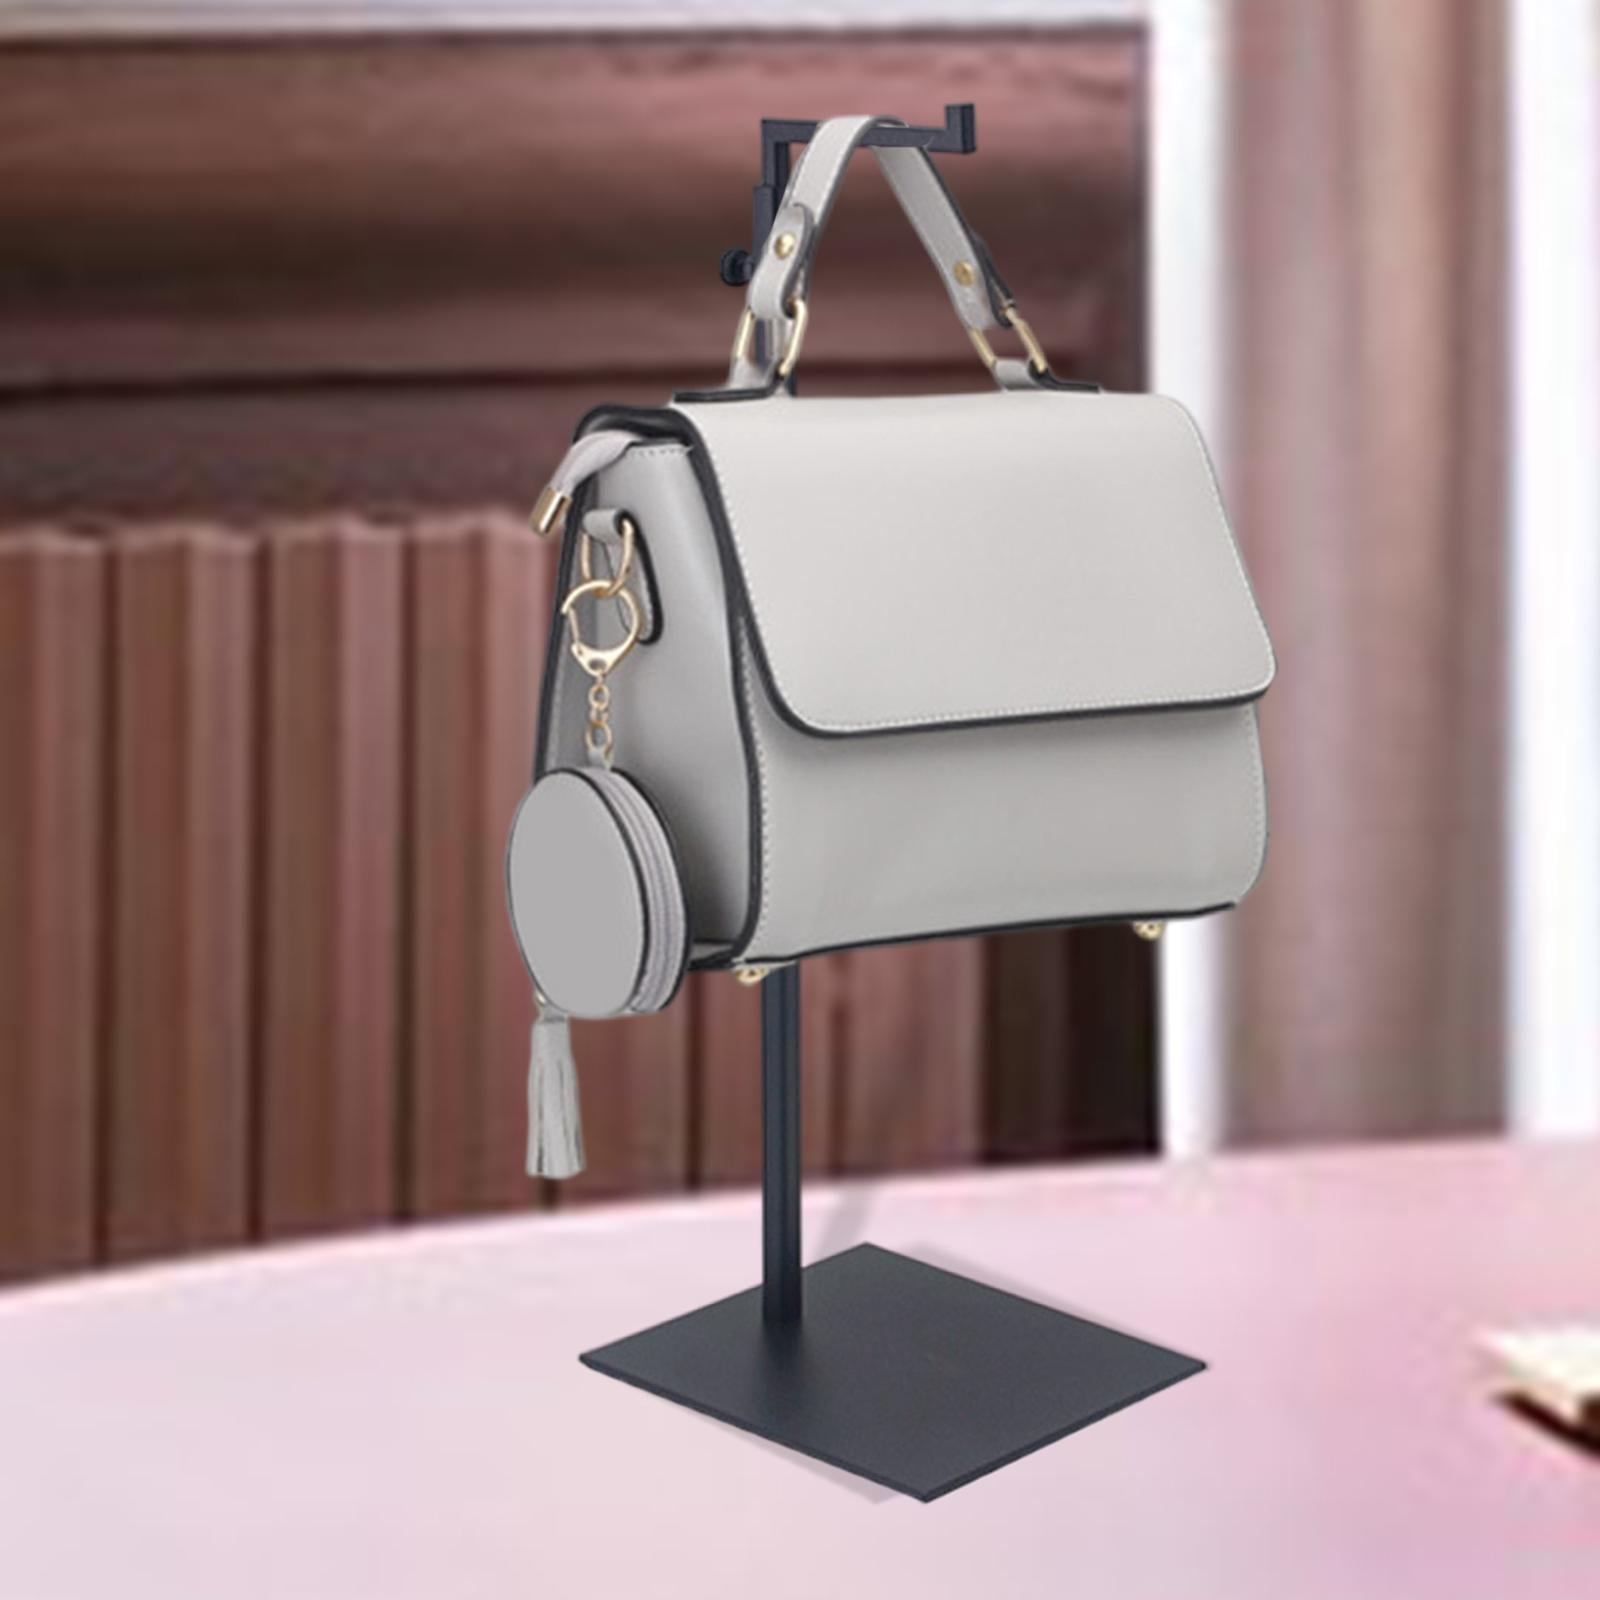 Handbag Display Stand Sturdy Double Hook Stainless Steel Bags Display Holder  | eBay